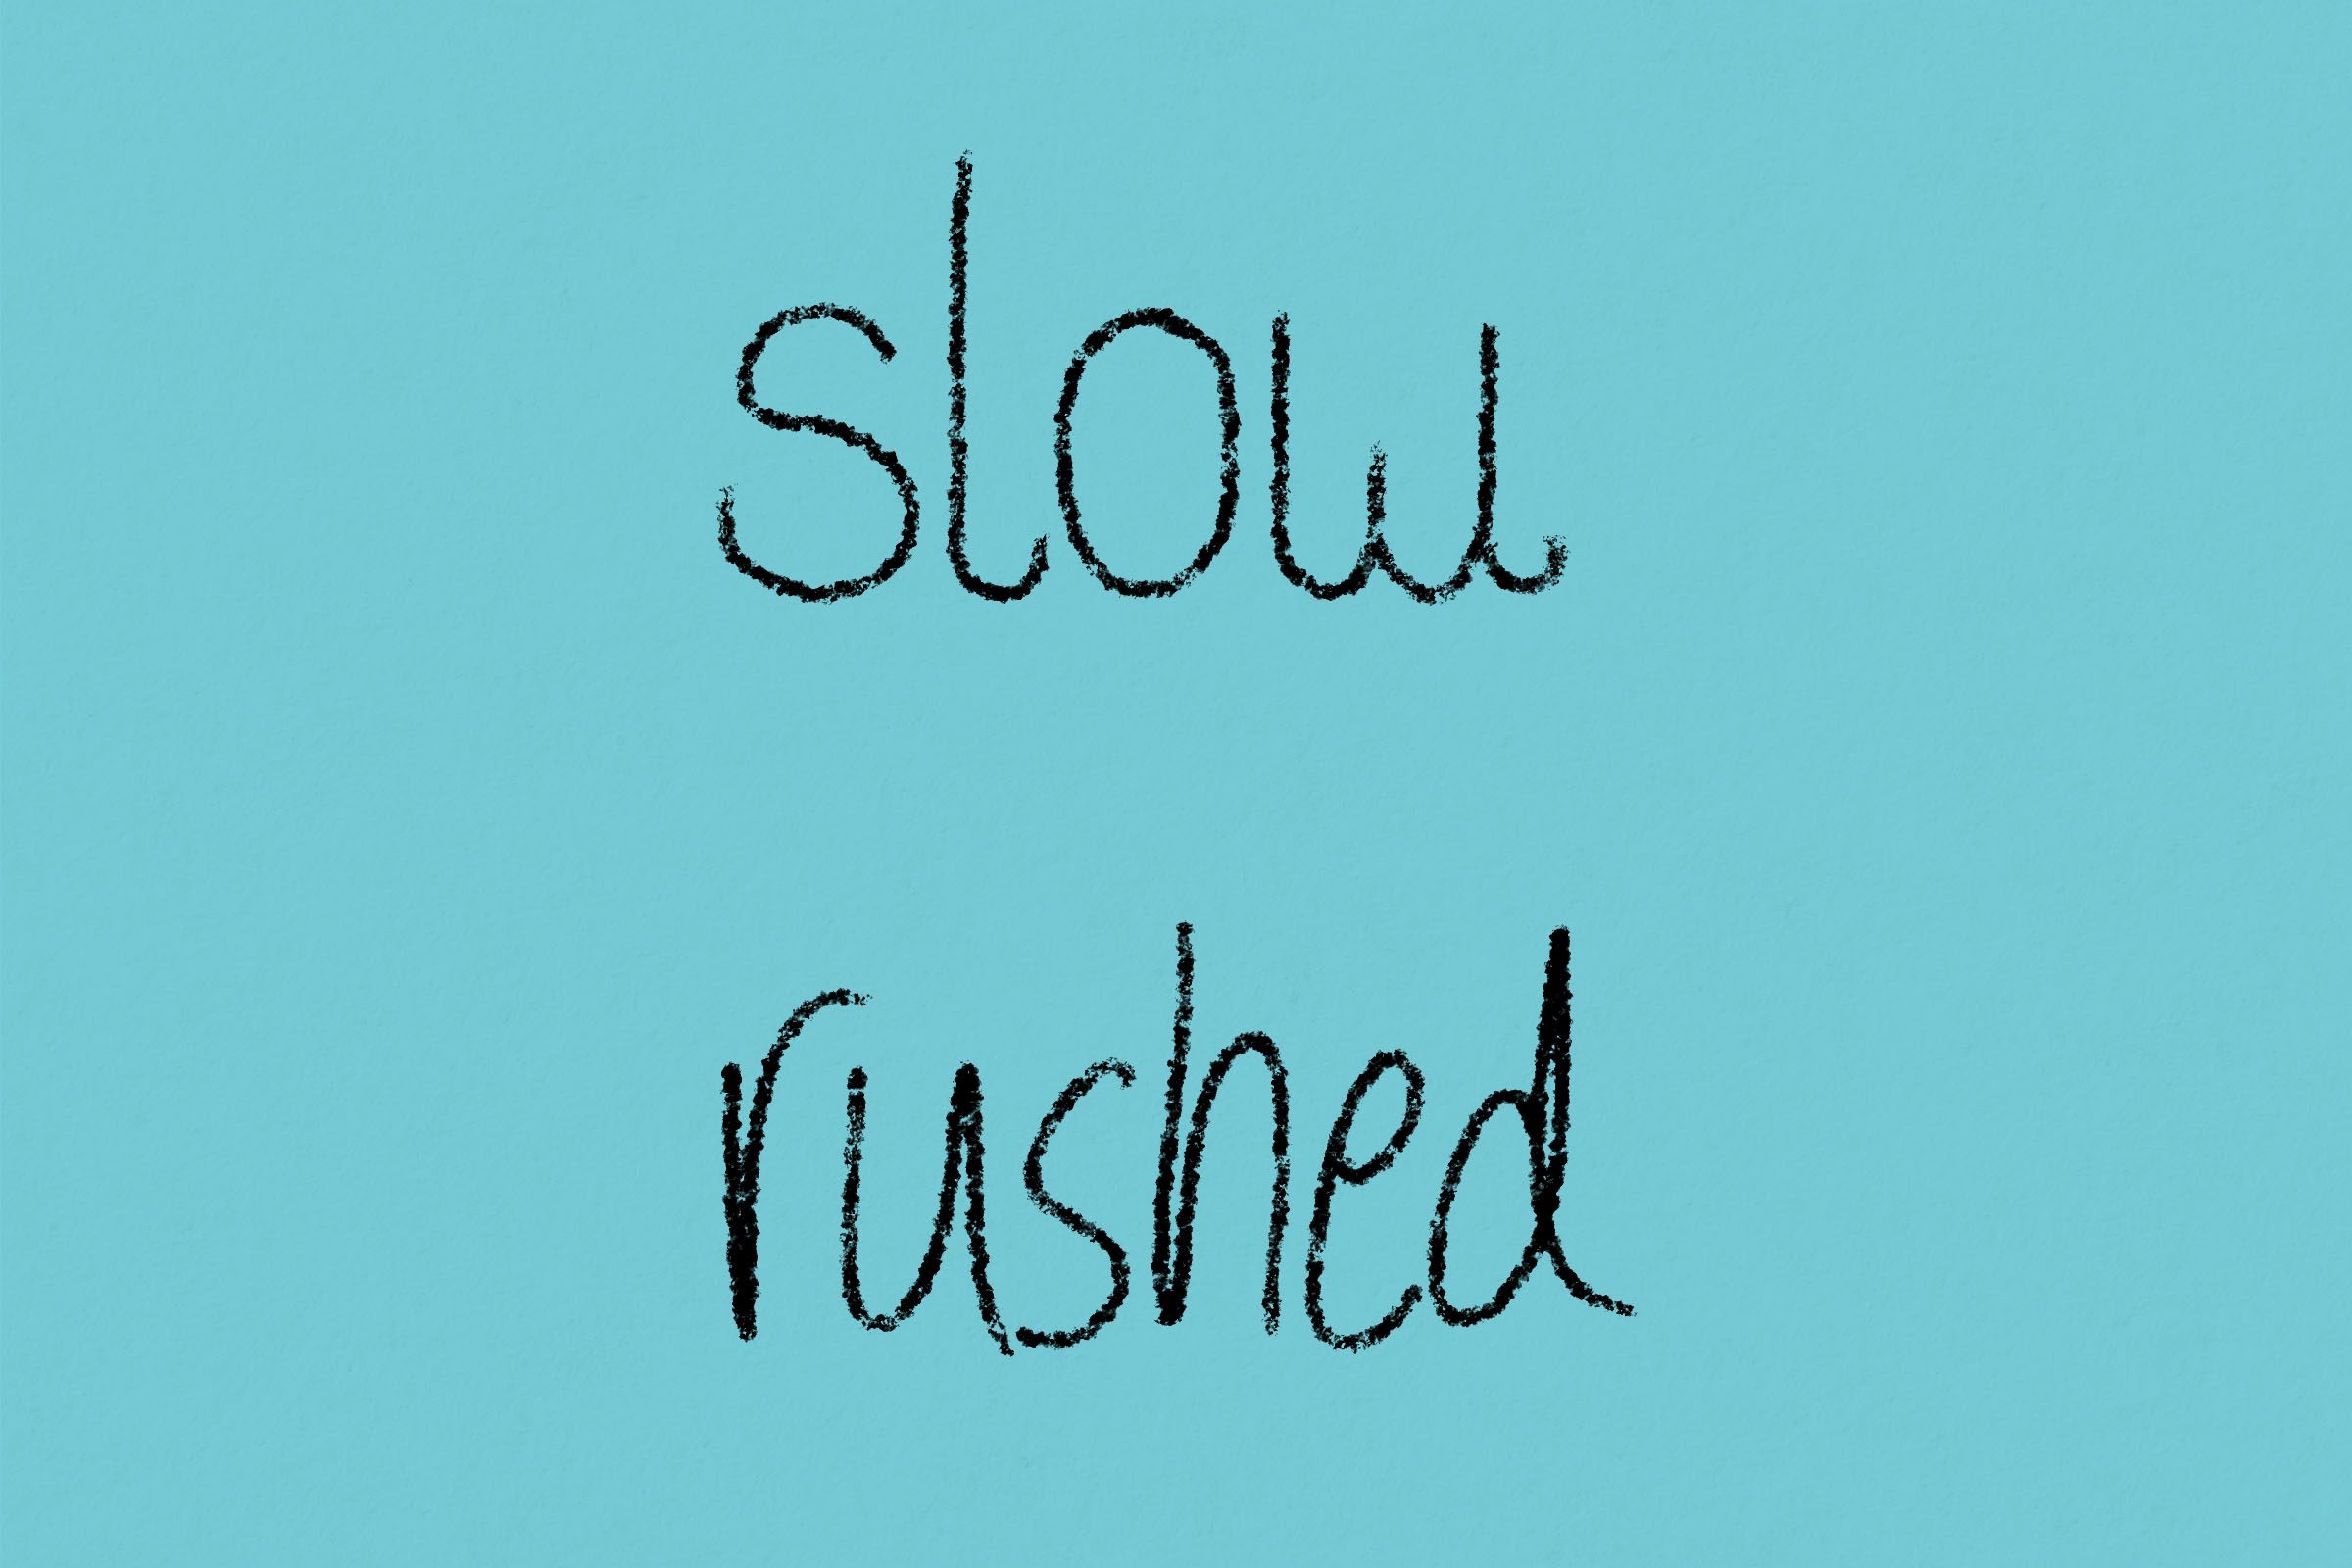 Handwriting showing slow vs rushed writing